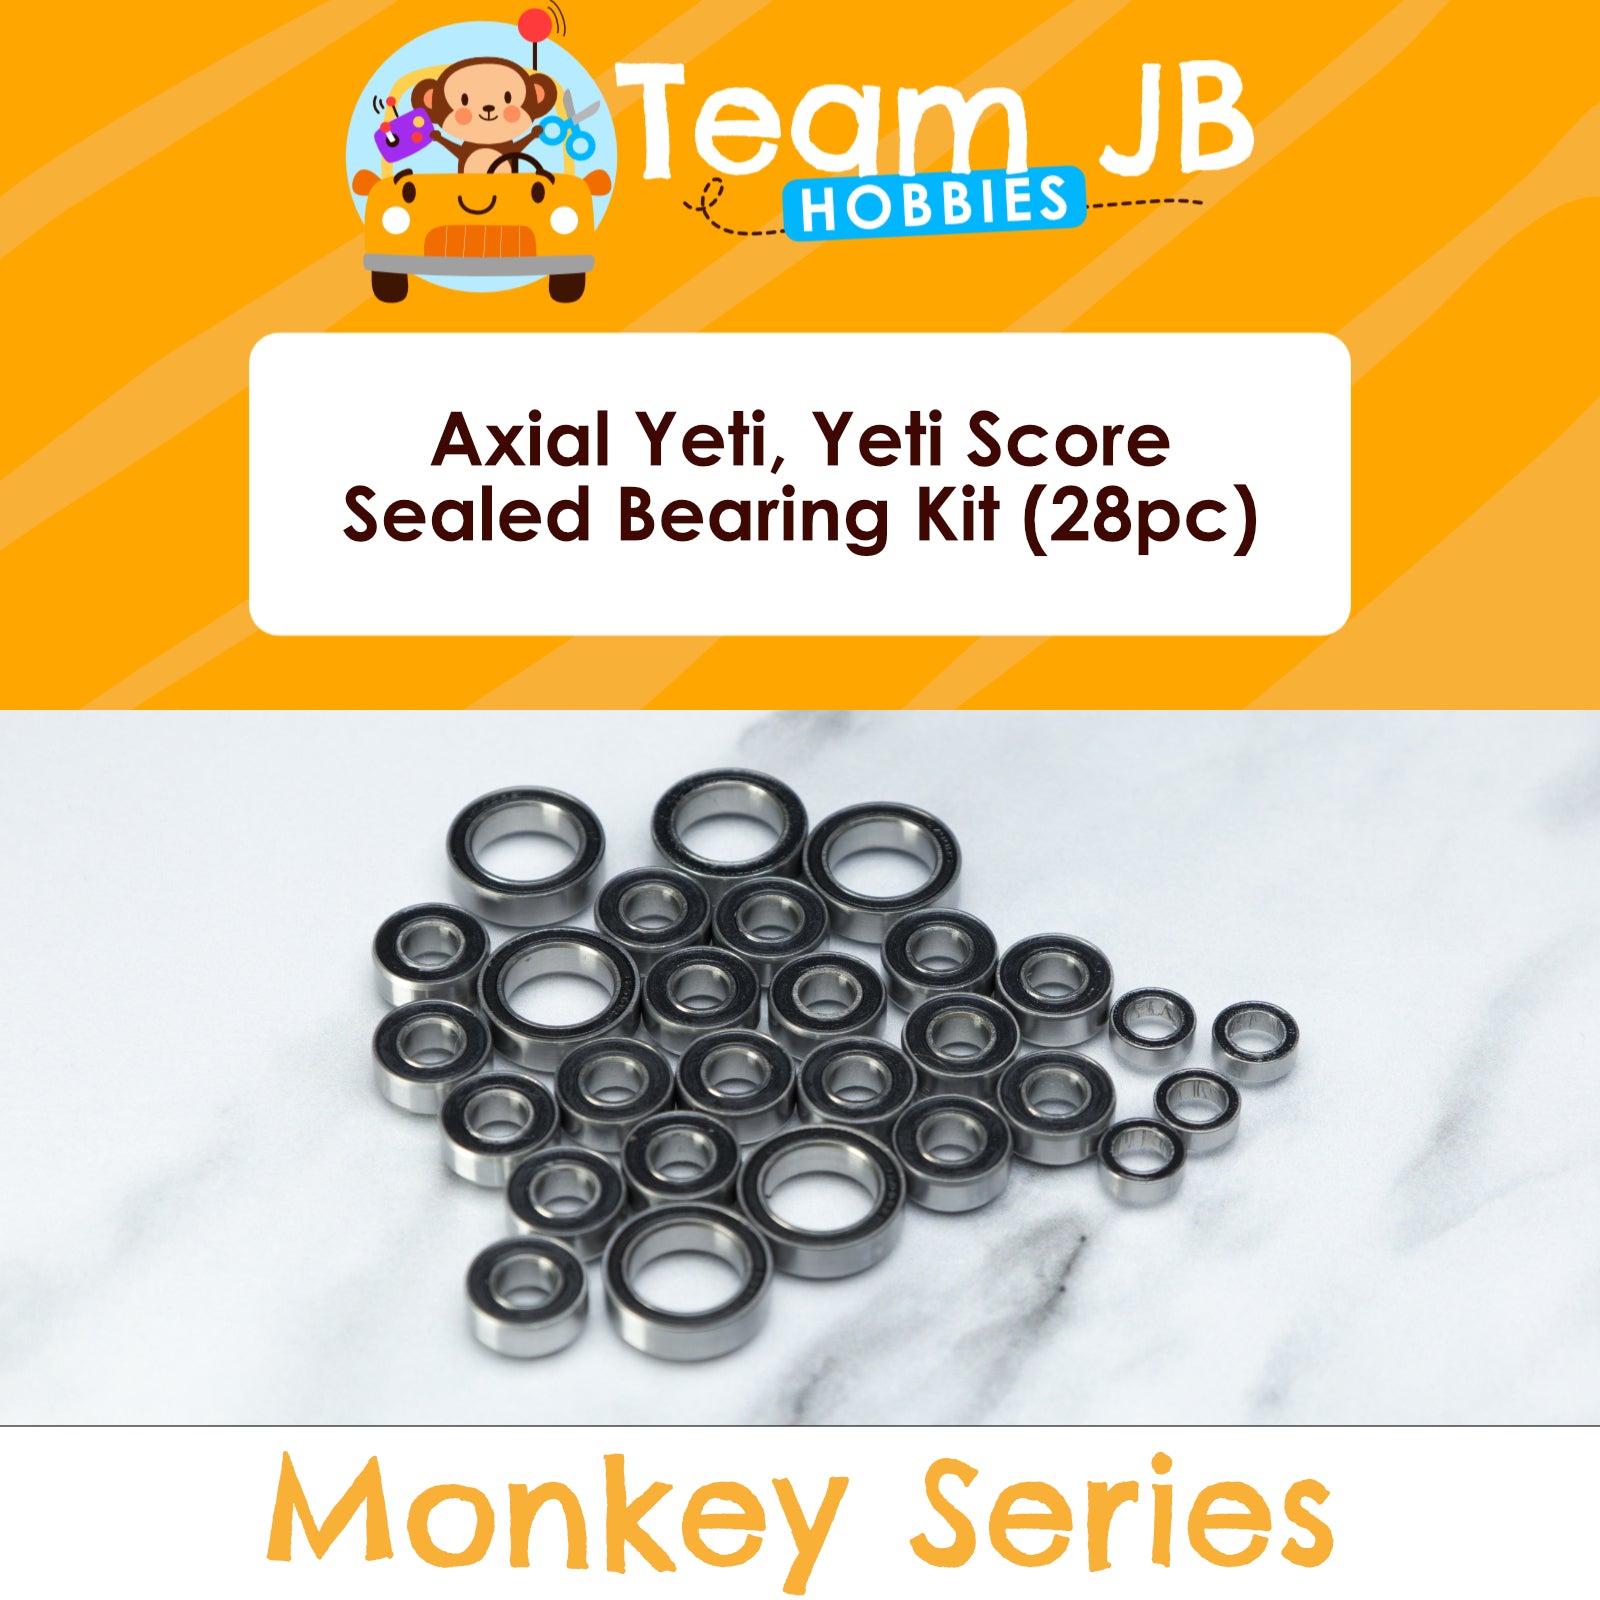 Axial Yeti, Yeti SCORE - Sealed Bearing Kit